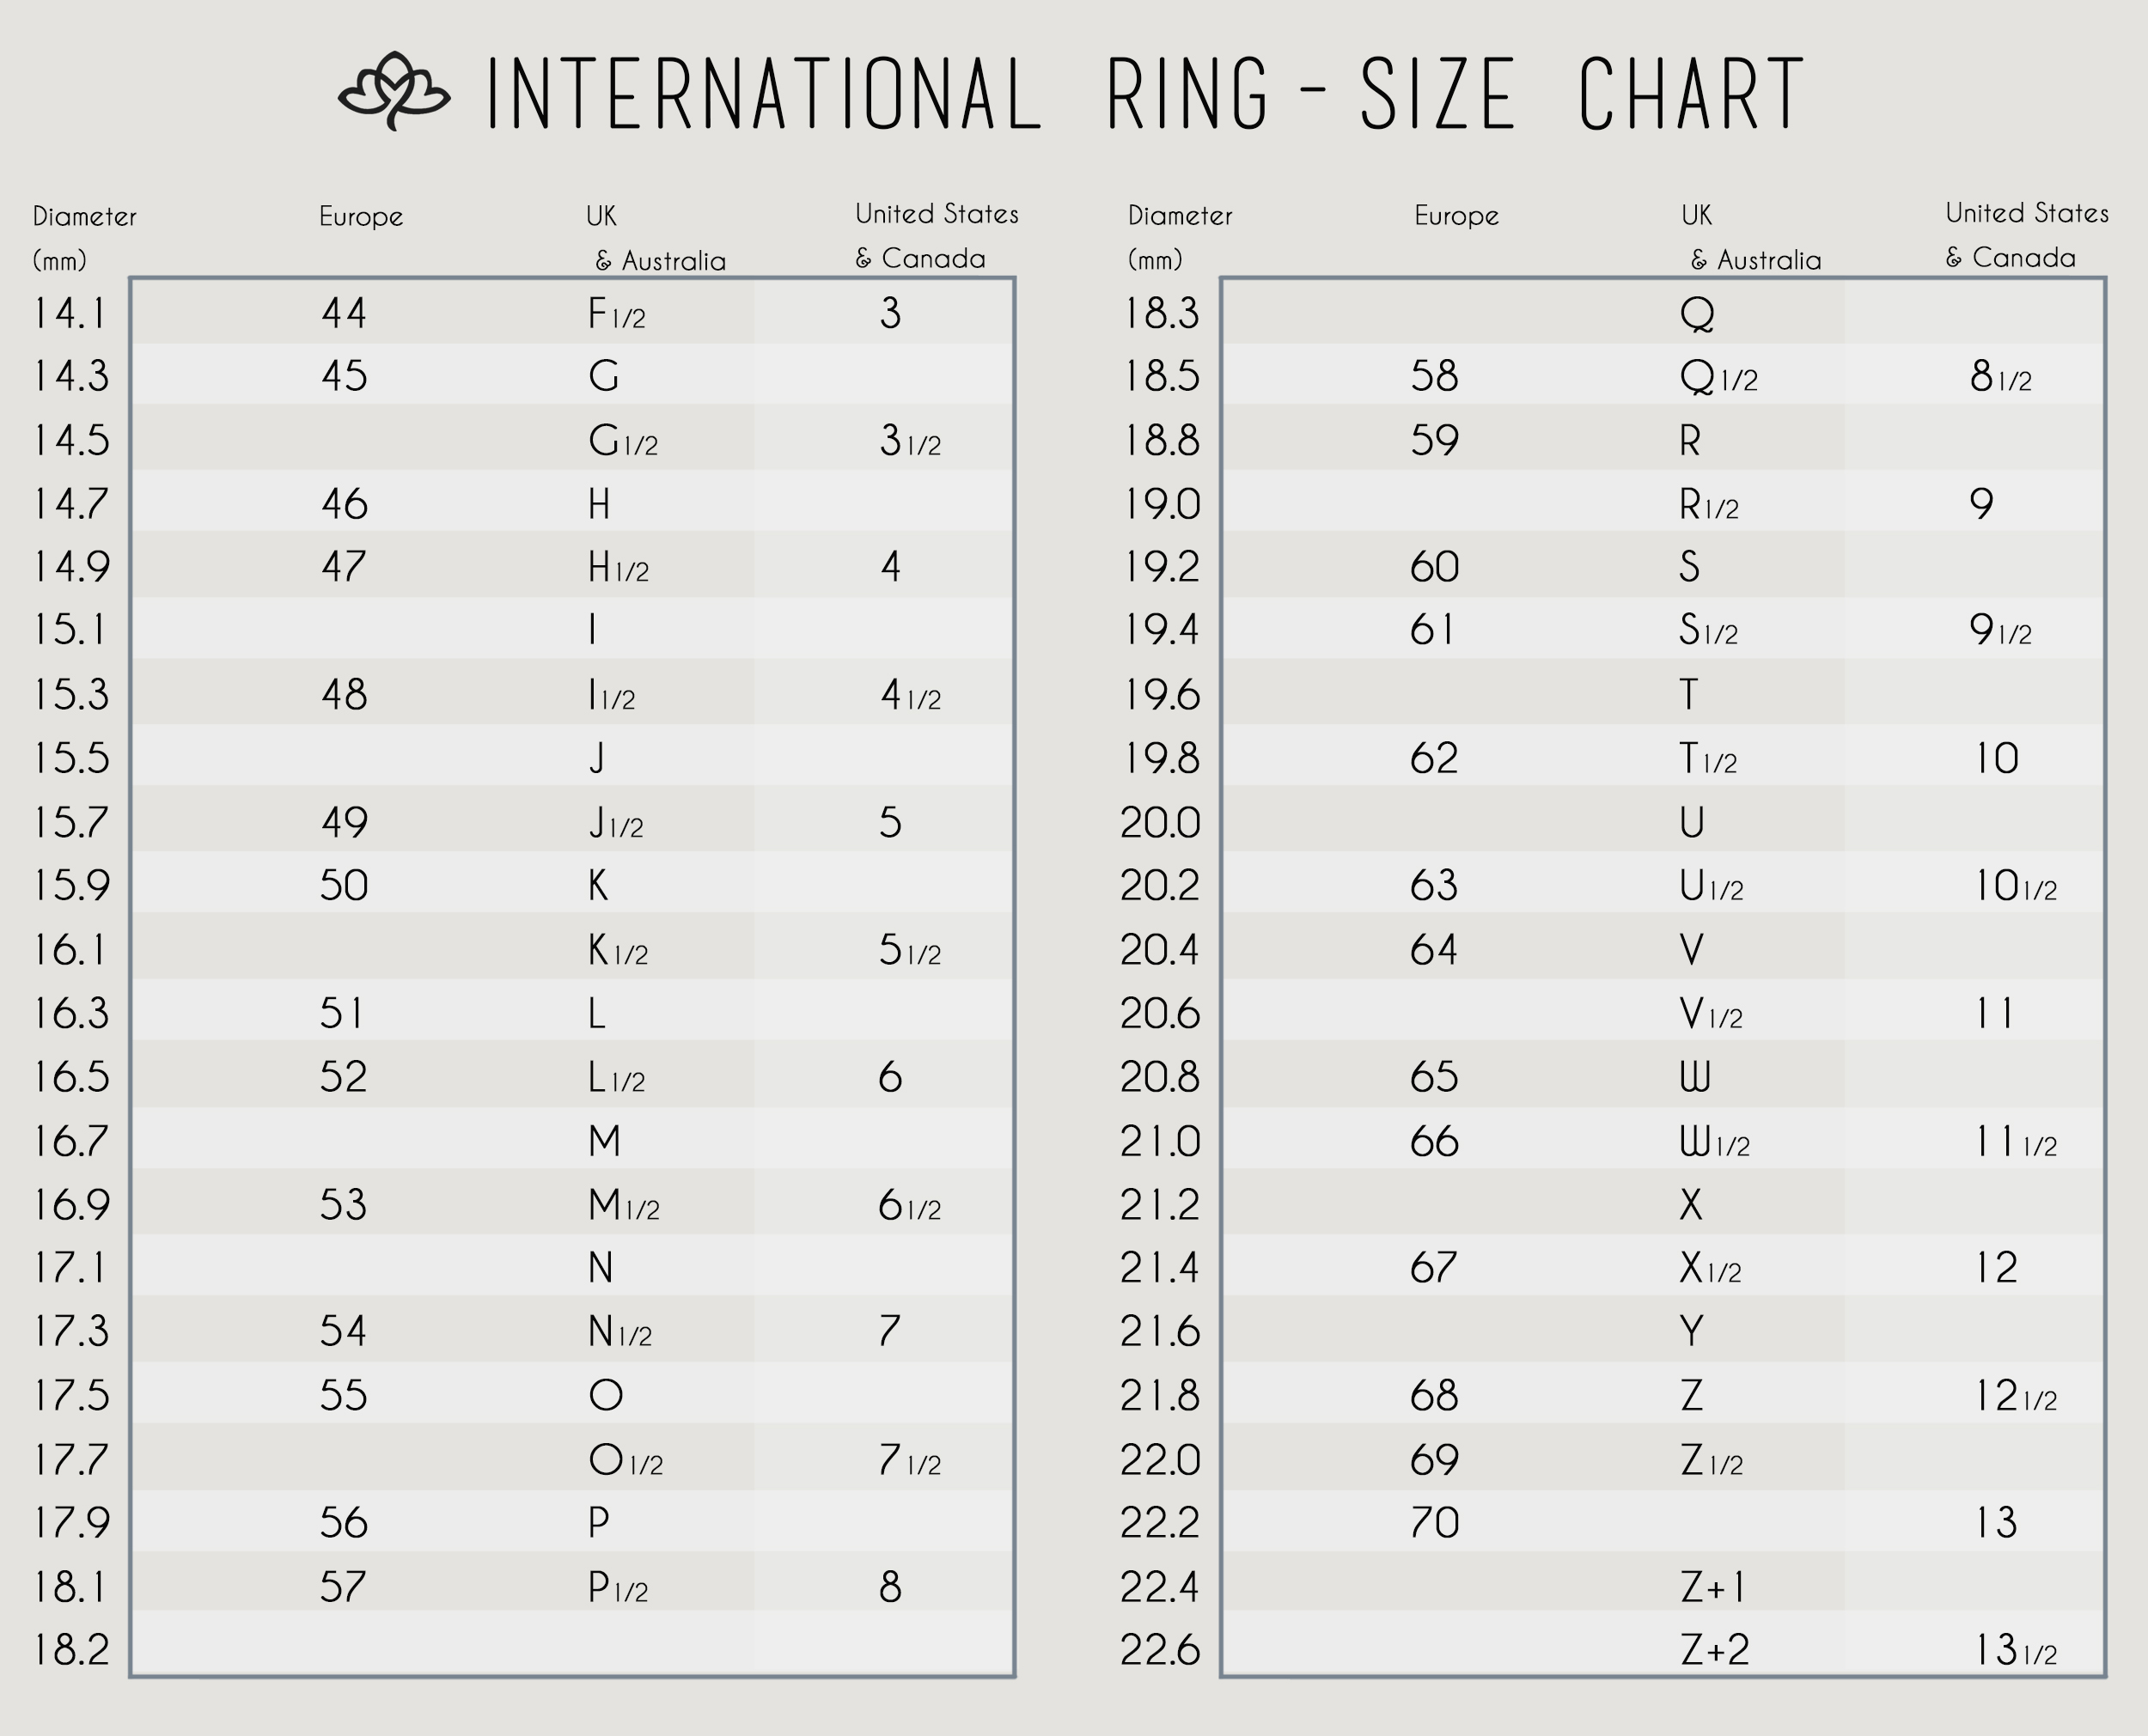 Moissanite Size Chart